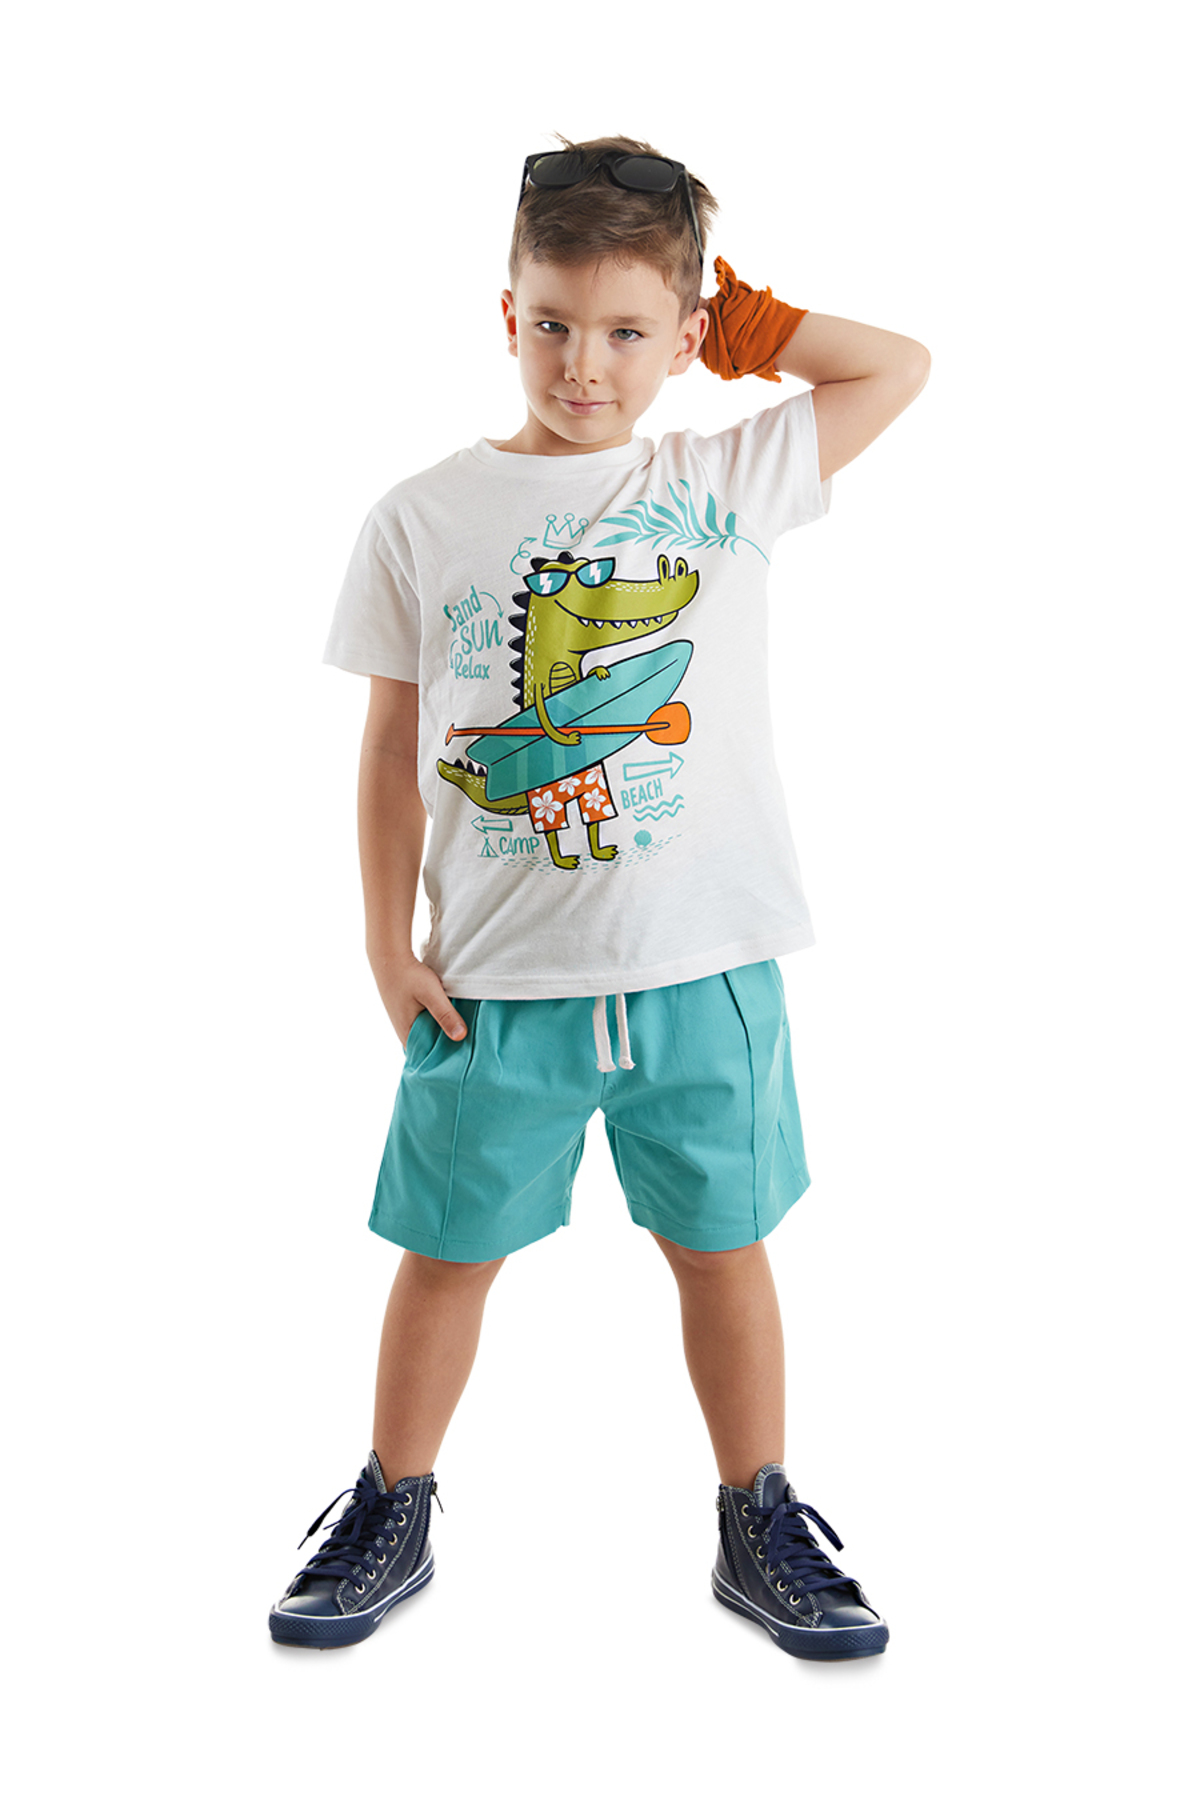 Denokids Alligator Boy T-shirt Gabardine Shorts Set